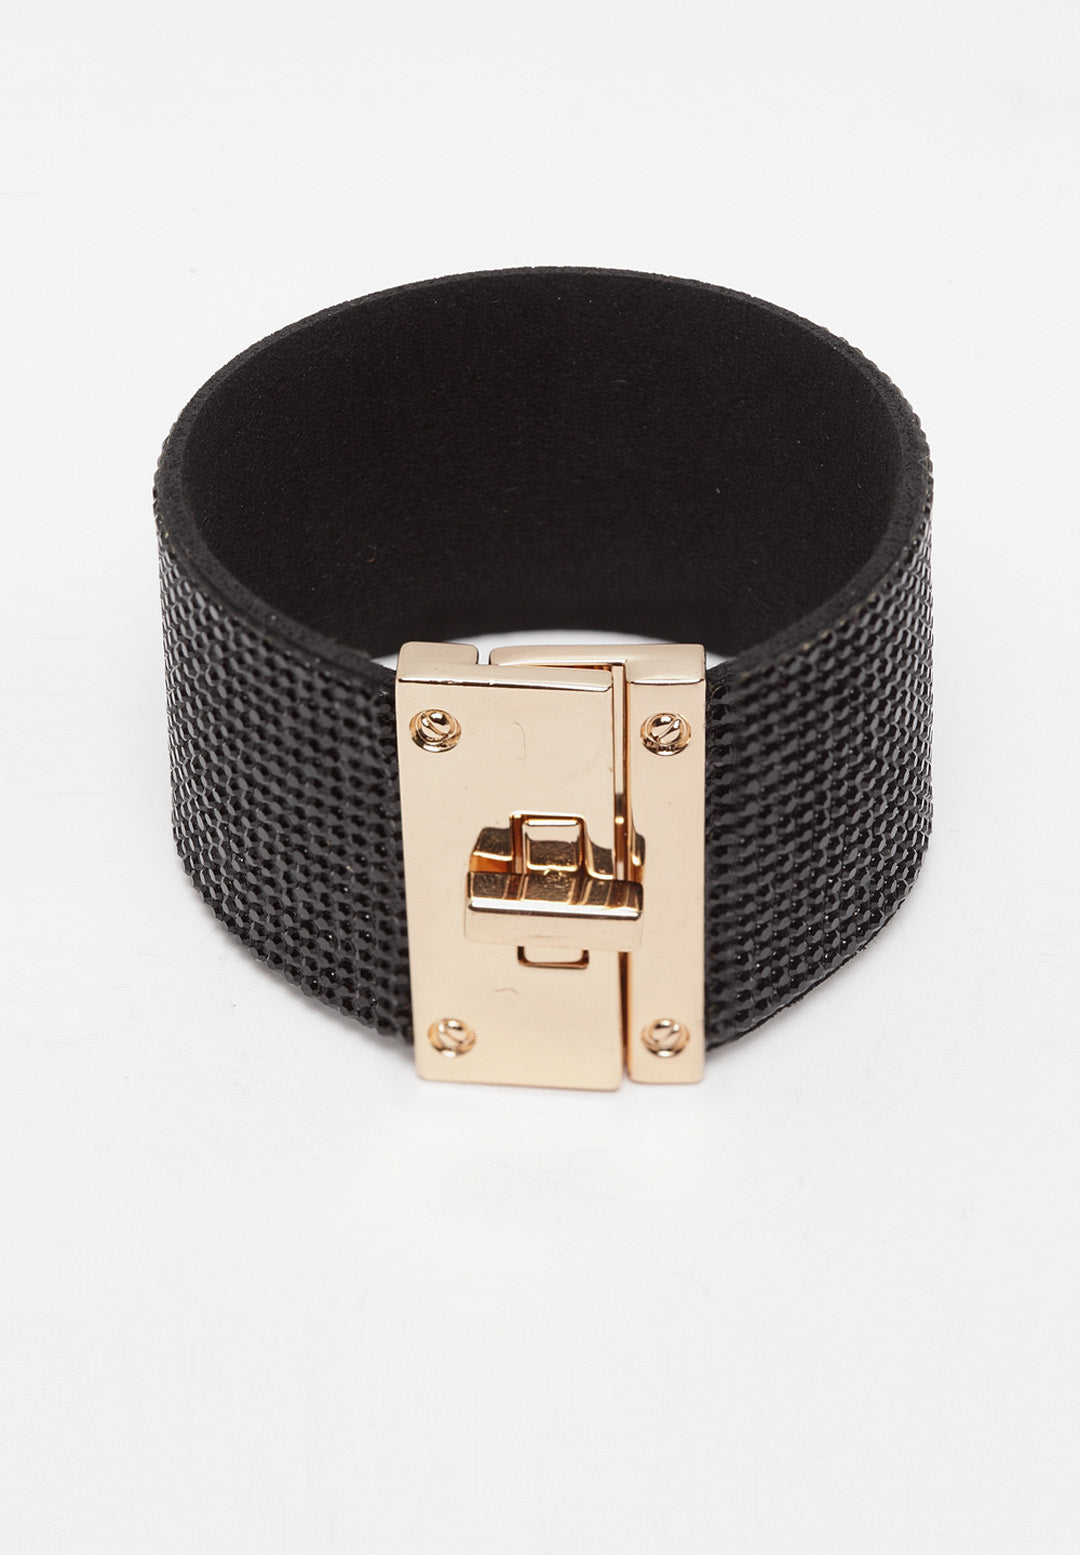 Avantgardistisches Pariser Luxus-Intervall-Hi-Fashion-Armband